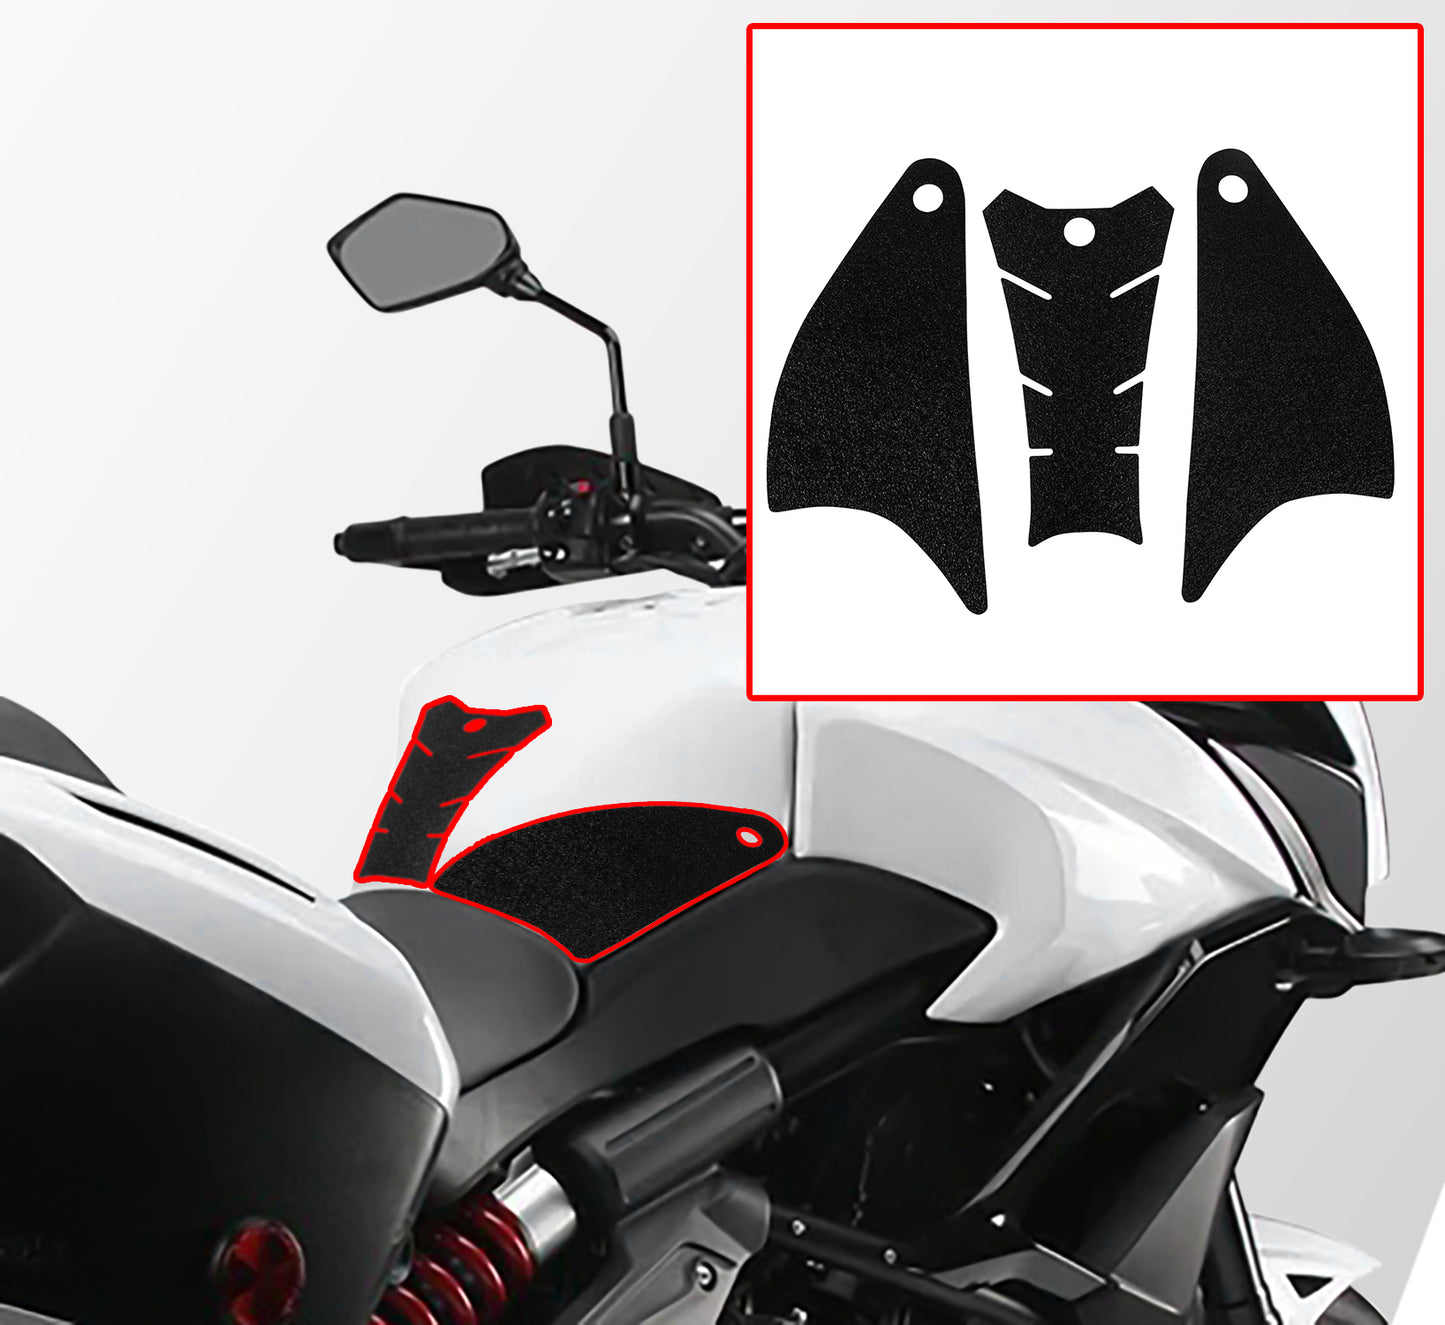 Wolfline Motocycle Anti Slip Tank Pad Stickers Side Gas Tank Pad Knee Grip Decals Protection For Kawasaki Versys1000 Versy 1000